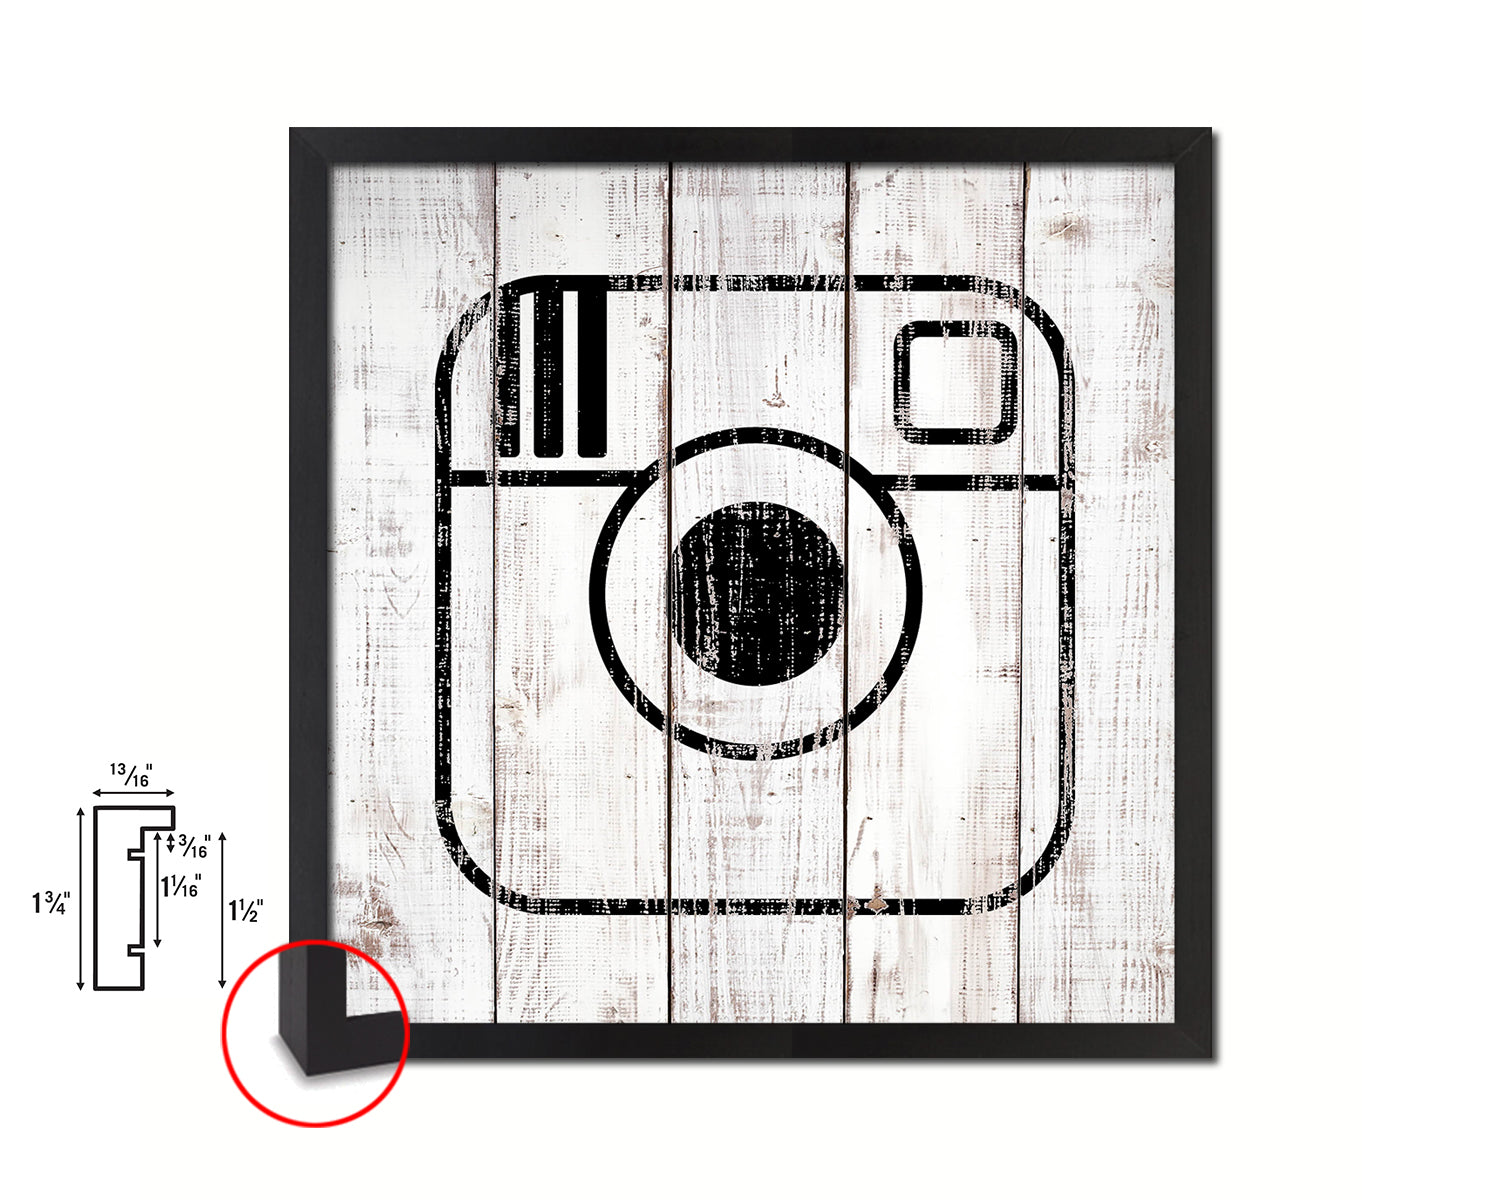 Instagram Social Media Symbol Icons logo Framed Print Shabby Chic Home Decor Wall Art Gifts